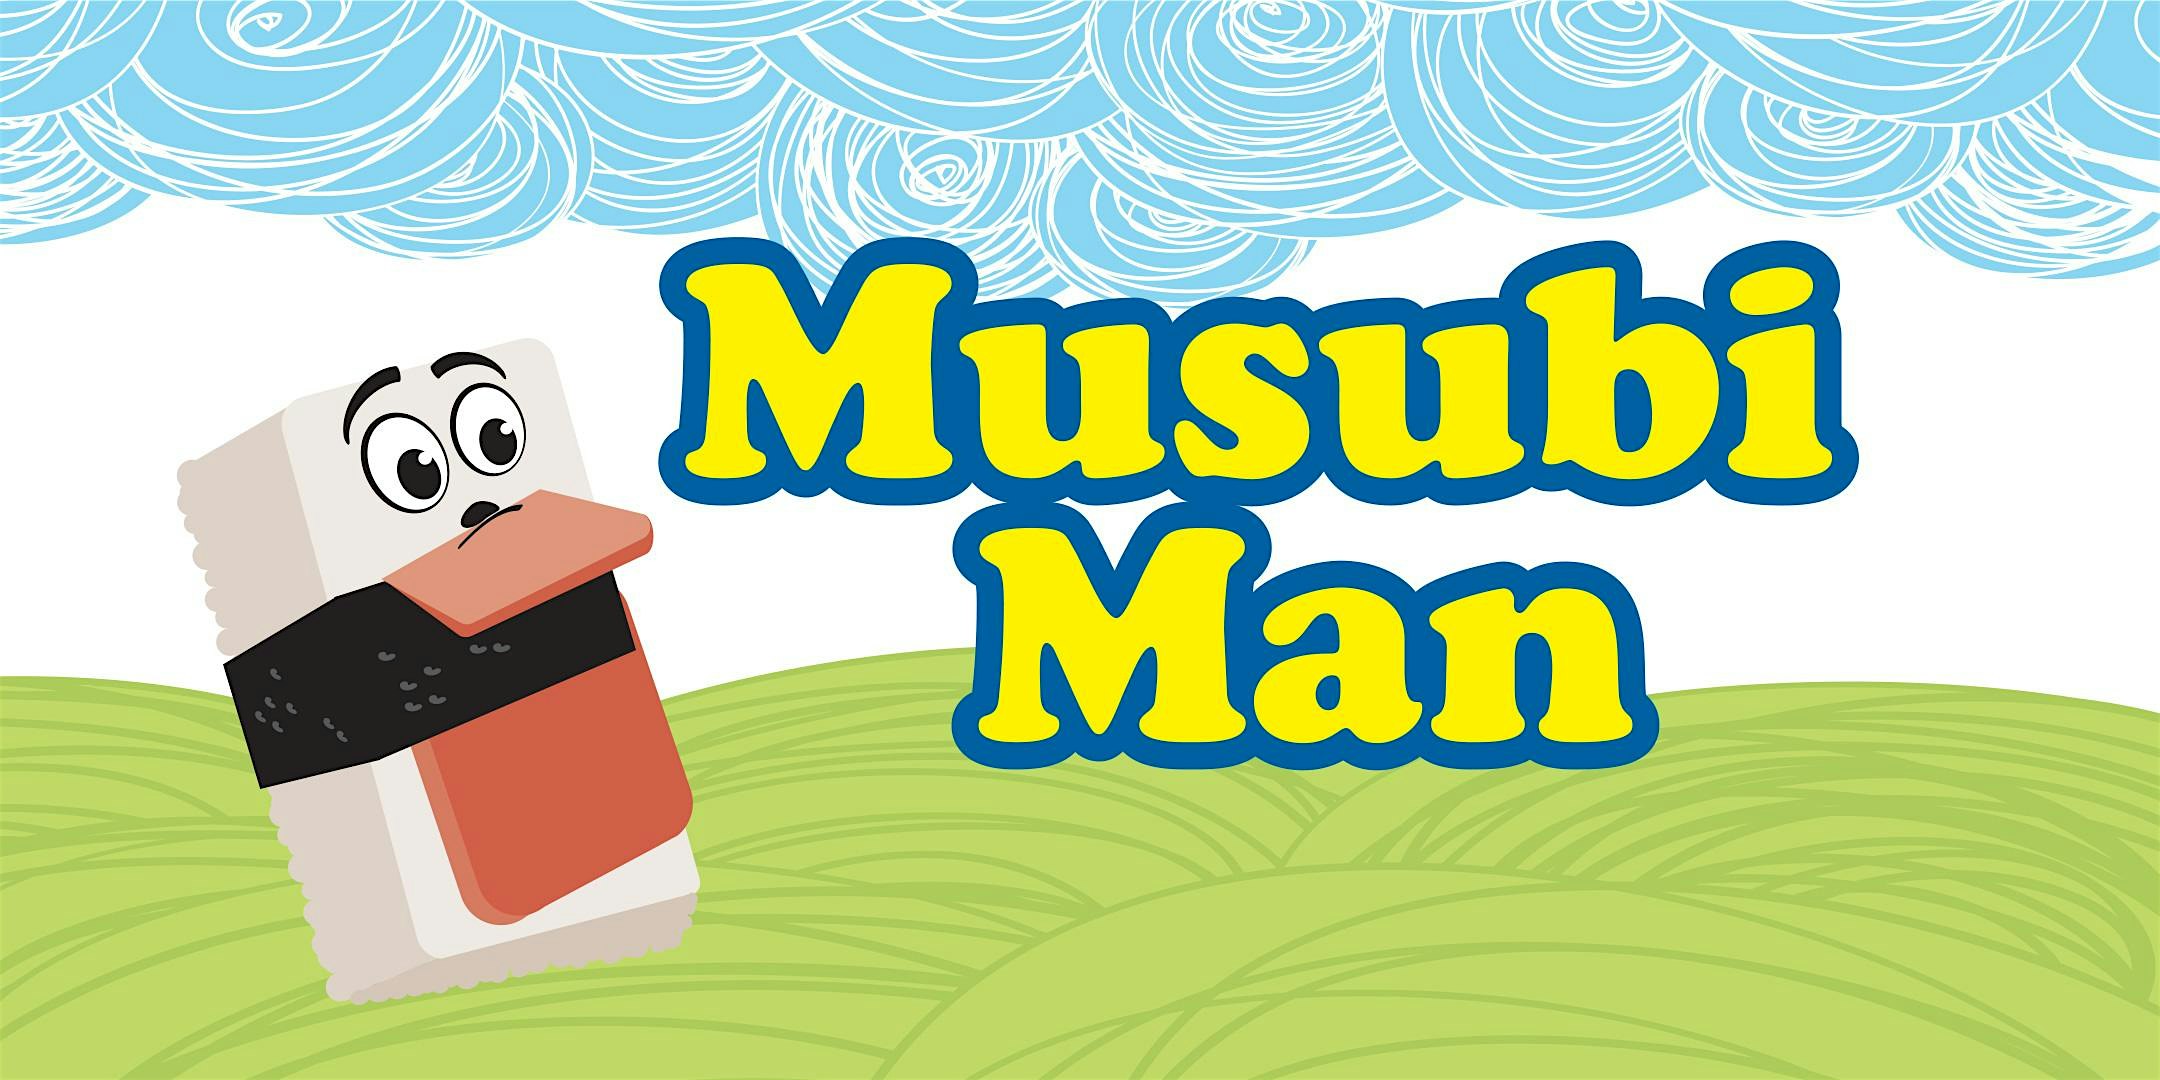 Musubi Man